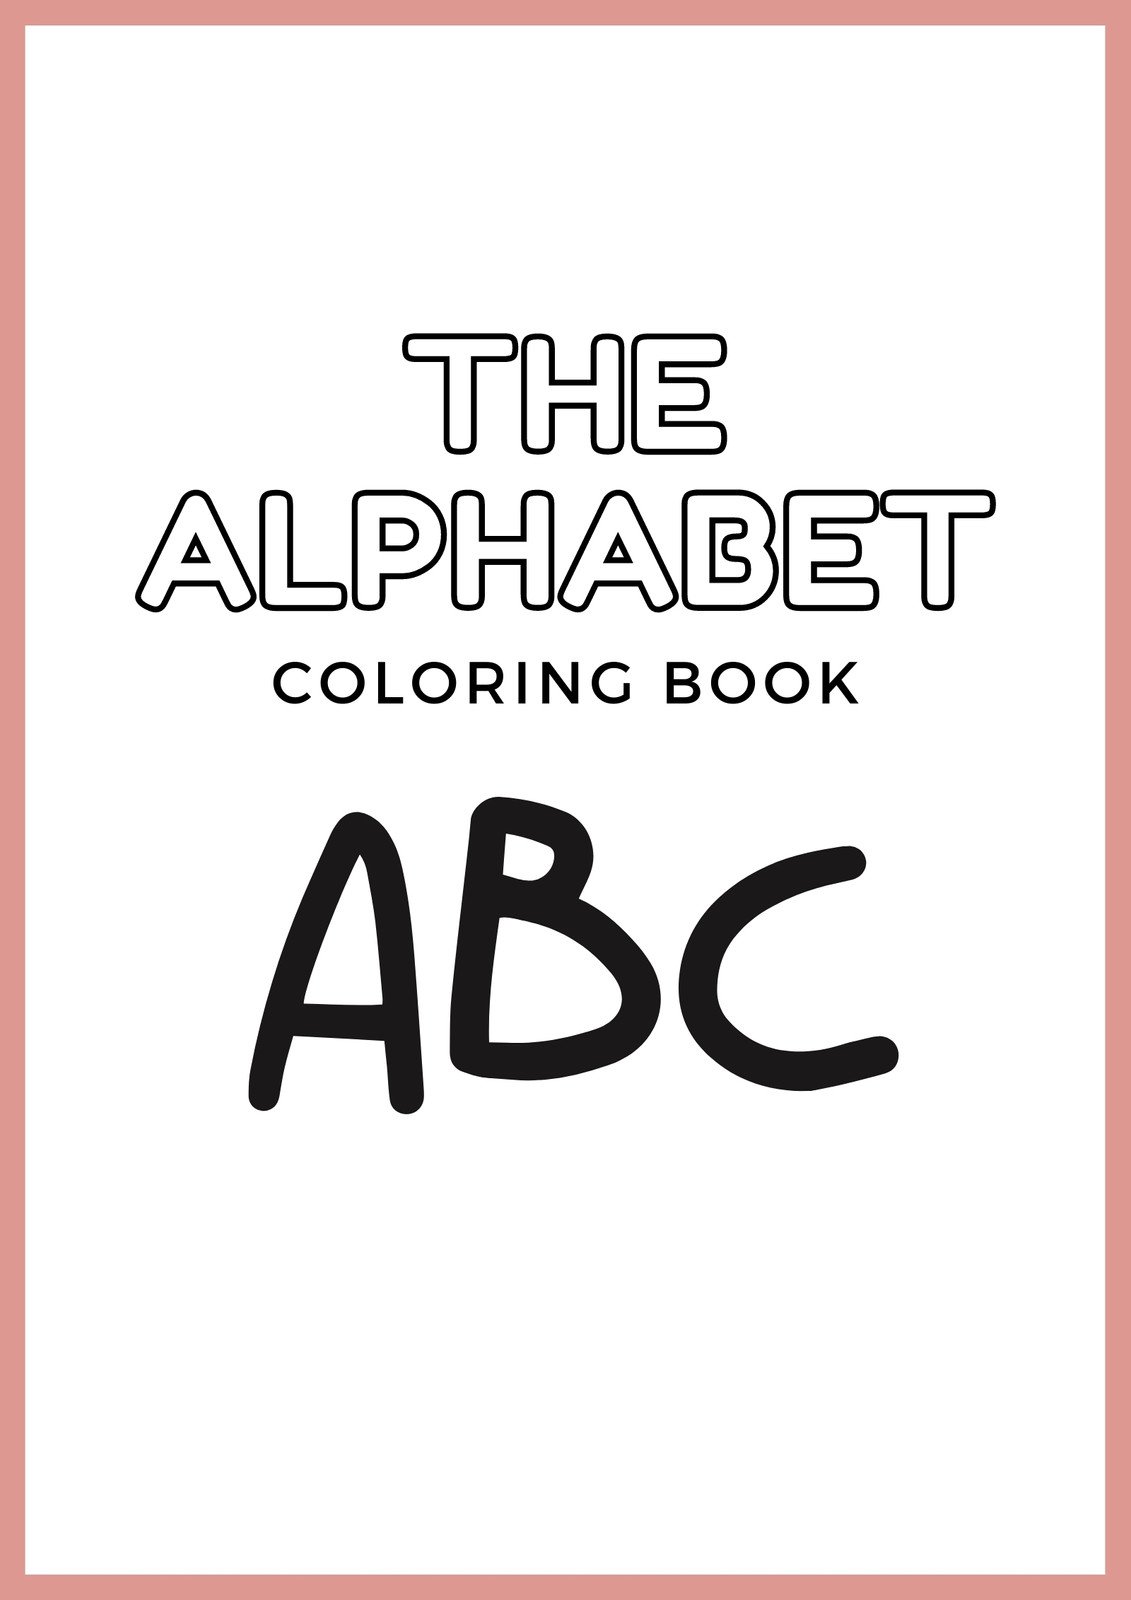 https://marketplace.canva.com/EAFG16jcru8/1/0/1131w/canva-pink-white-simple-alphabet-coloring-book-iOkMpjeyeoE.jpg